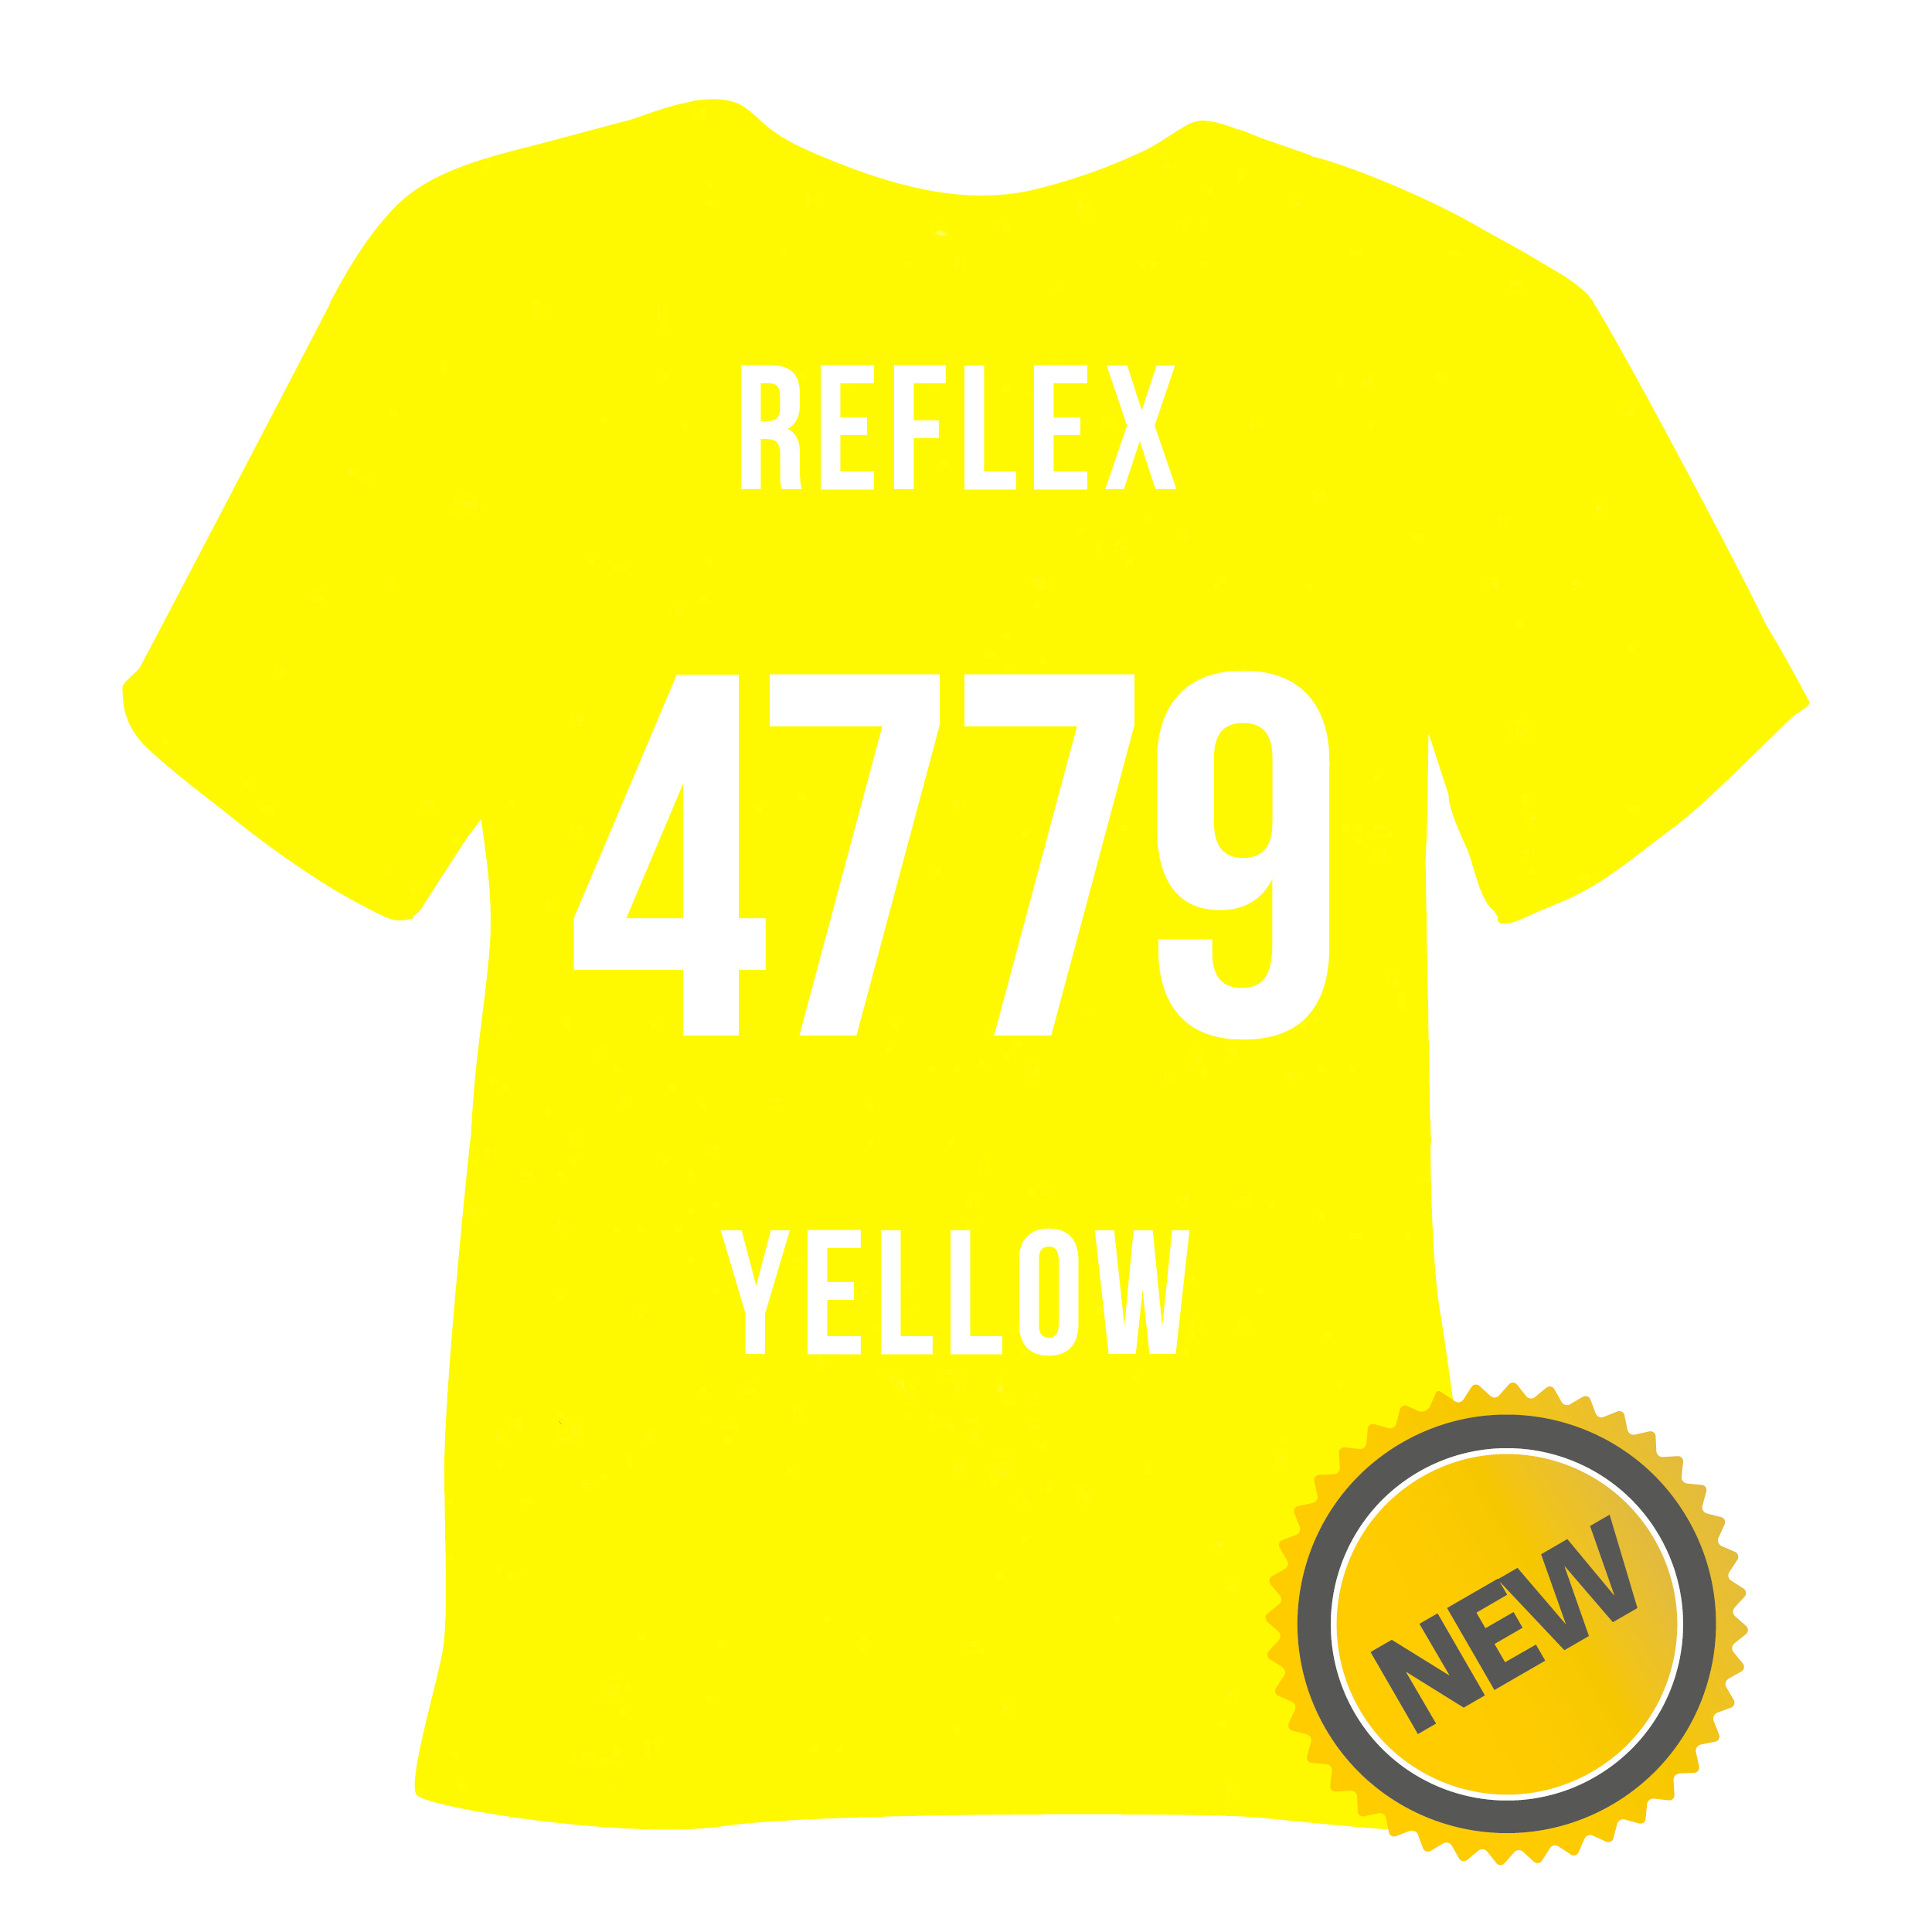 4779 Reflex Yellow